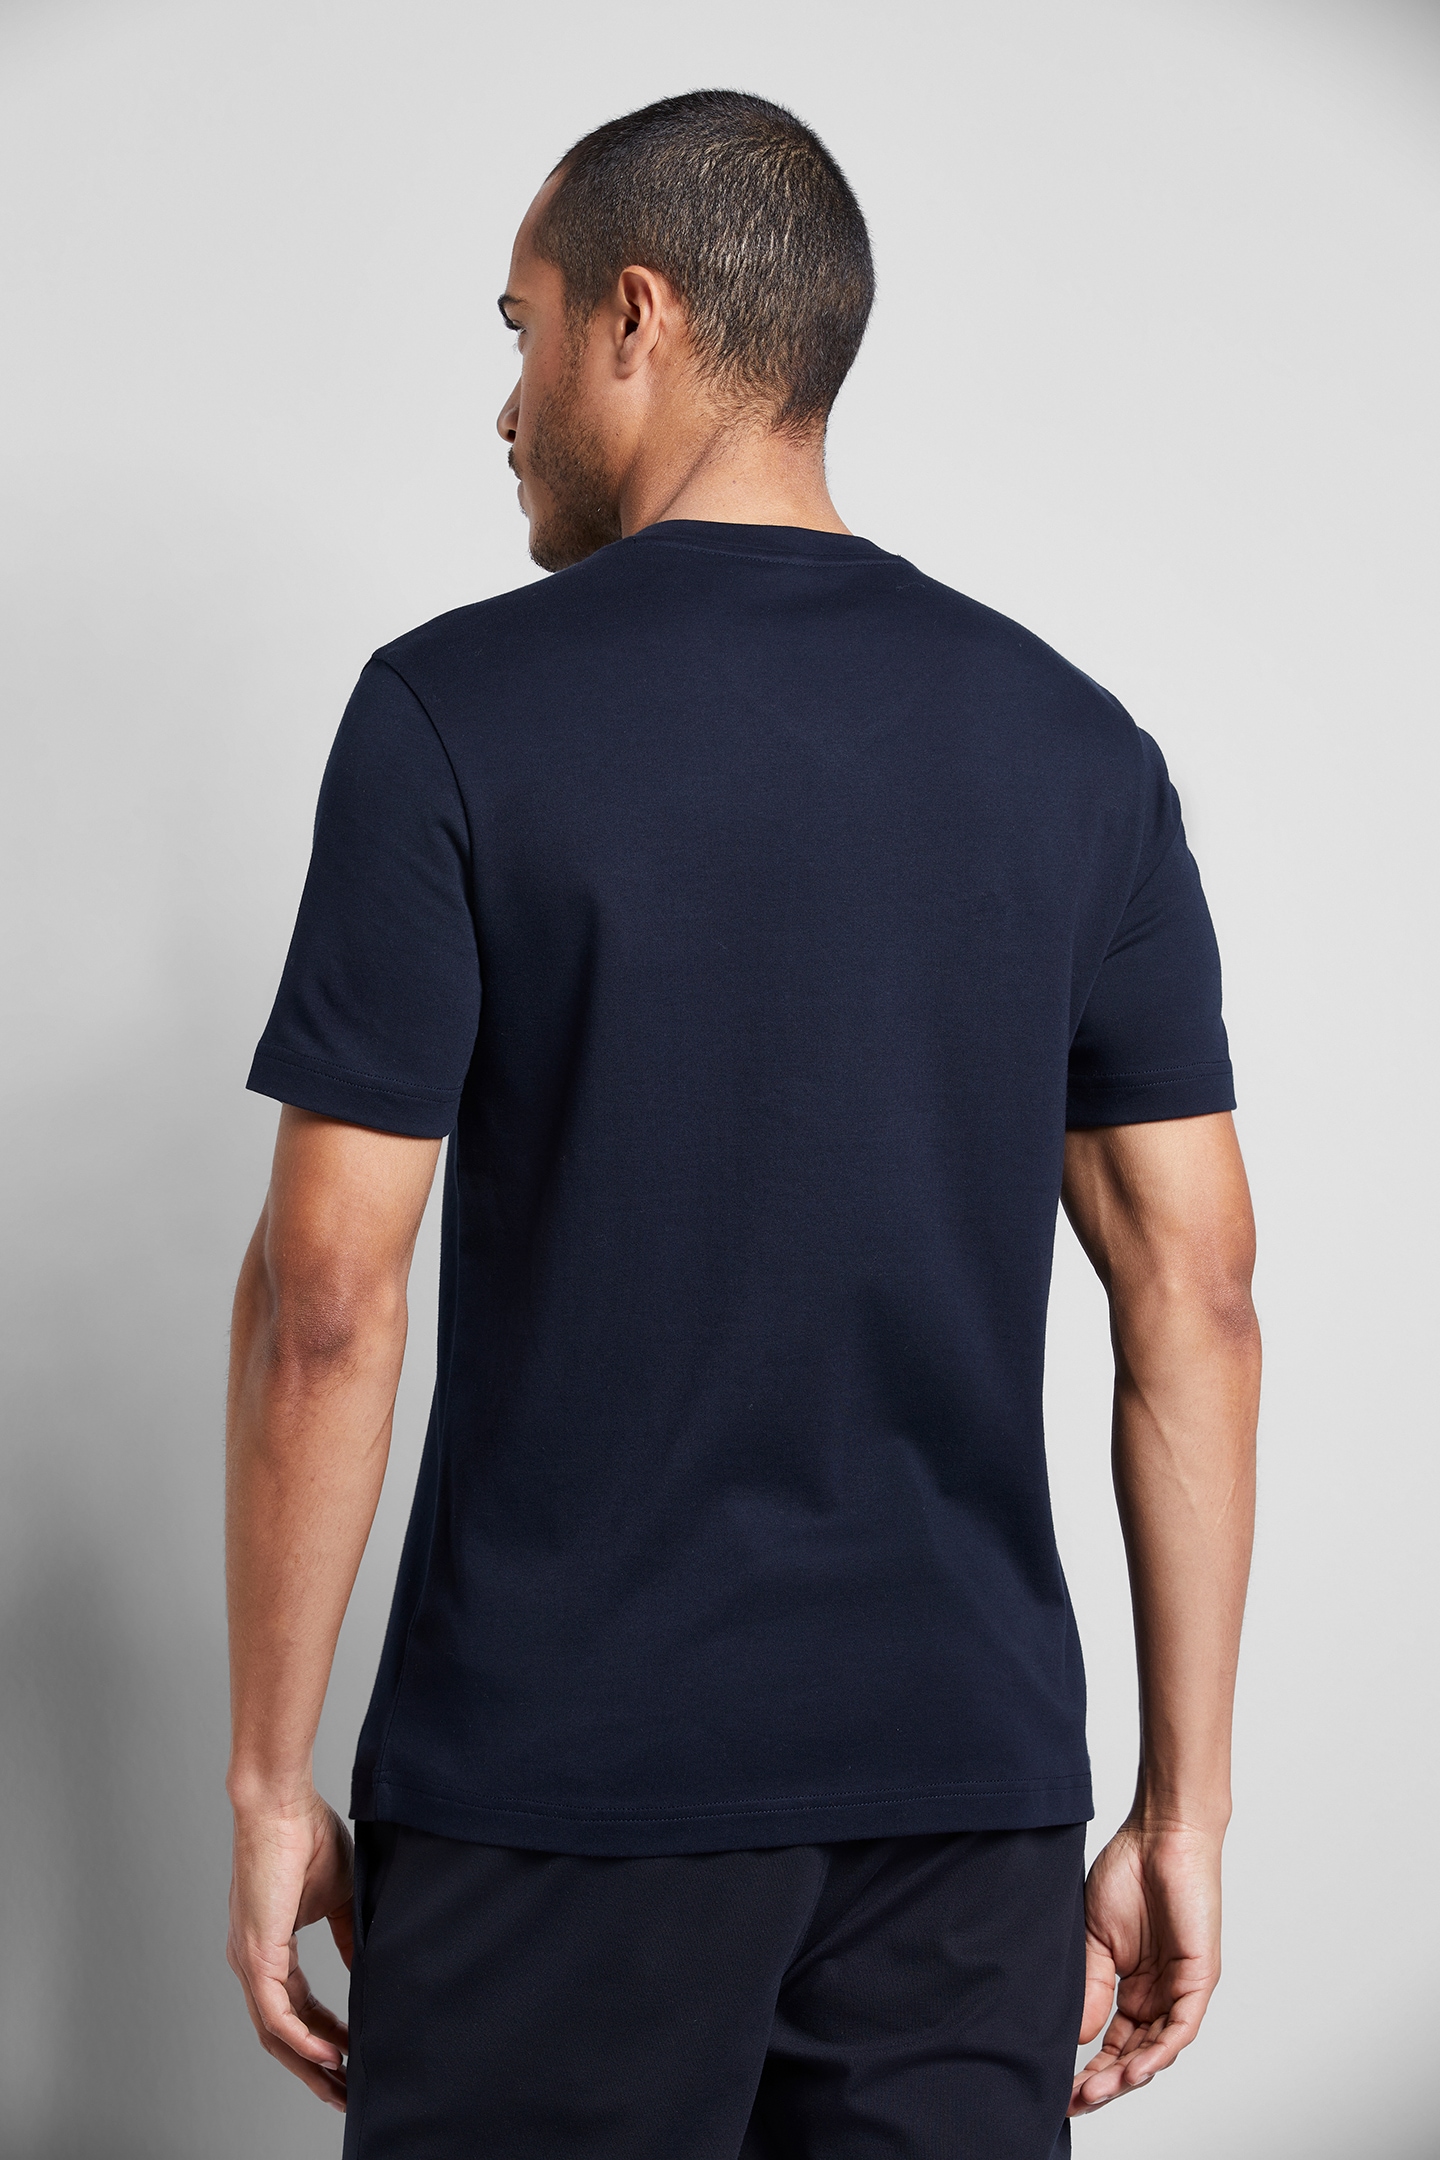 OTTO bei shoppen bugatti T-Shirt, online mit V-Ausschnitt